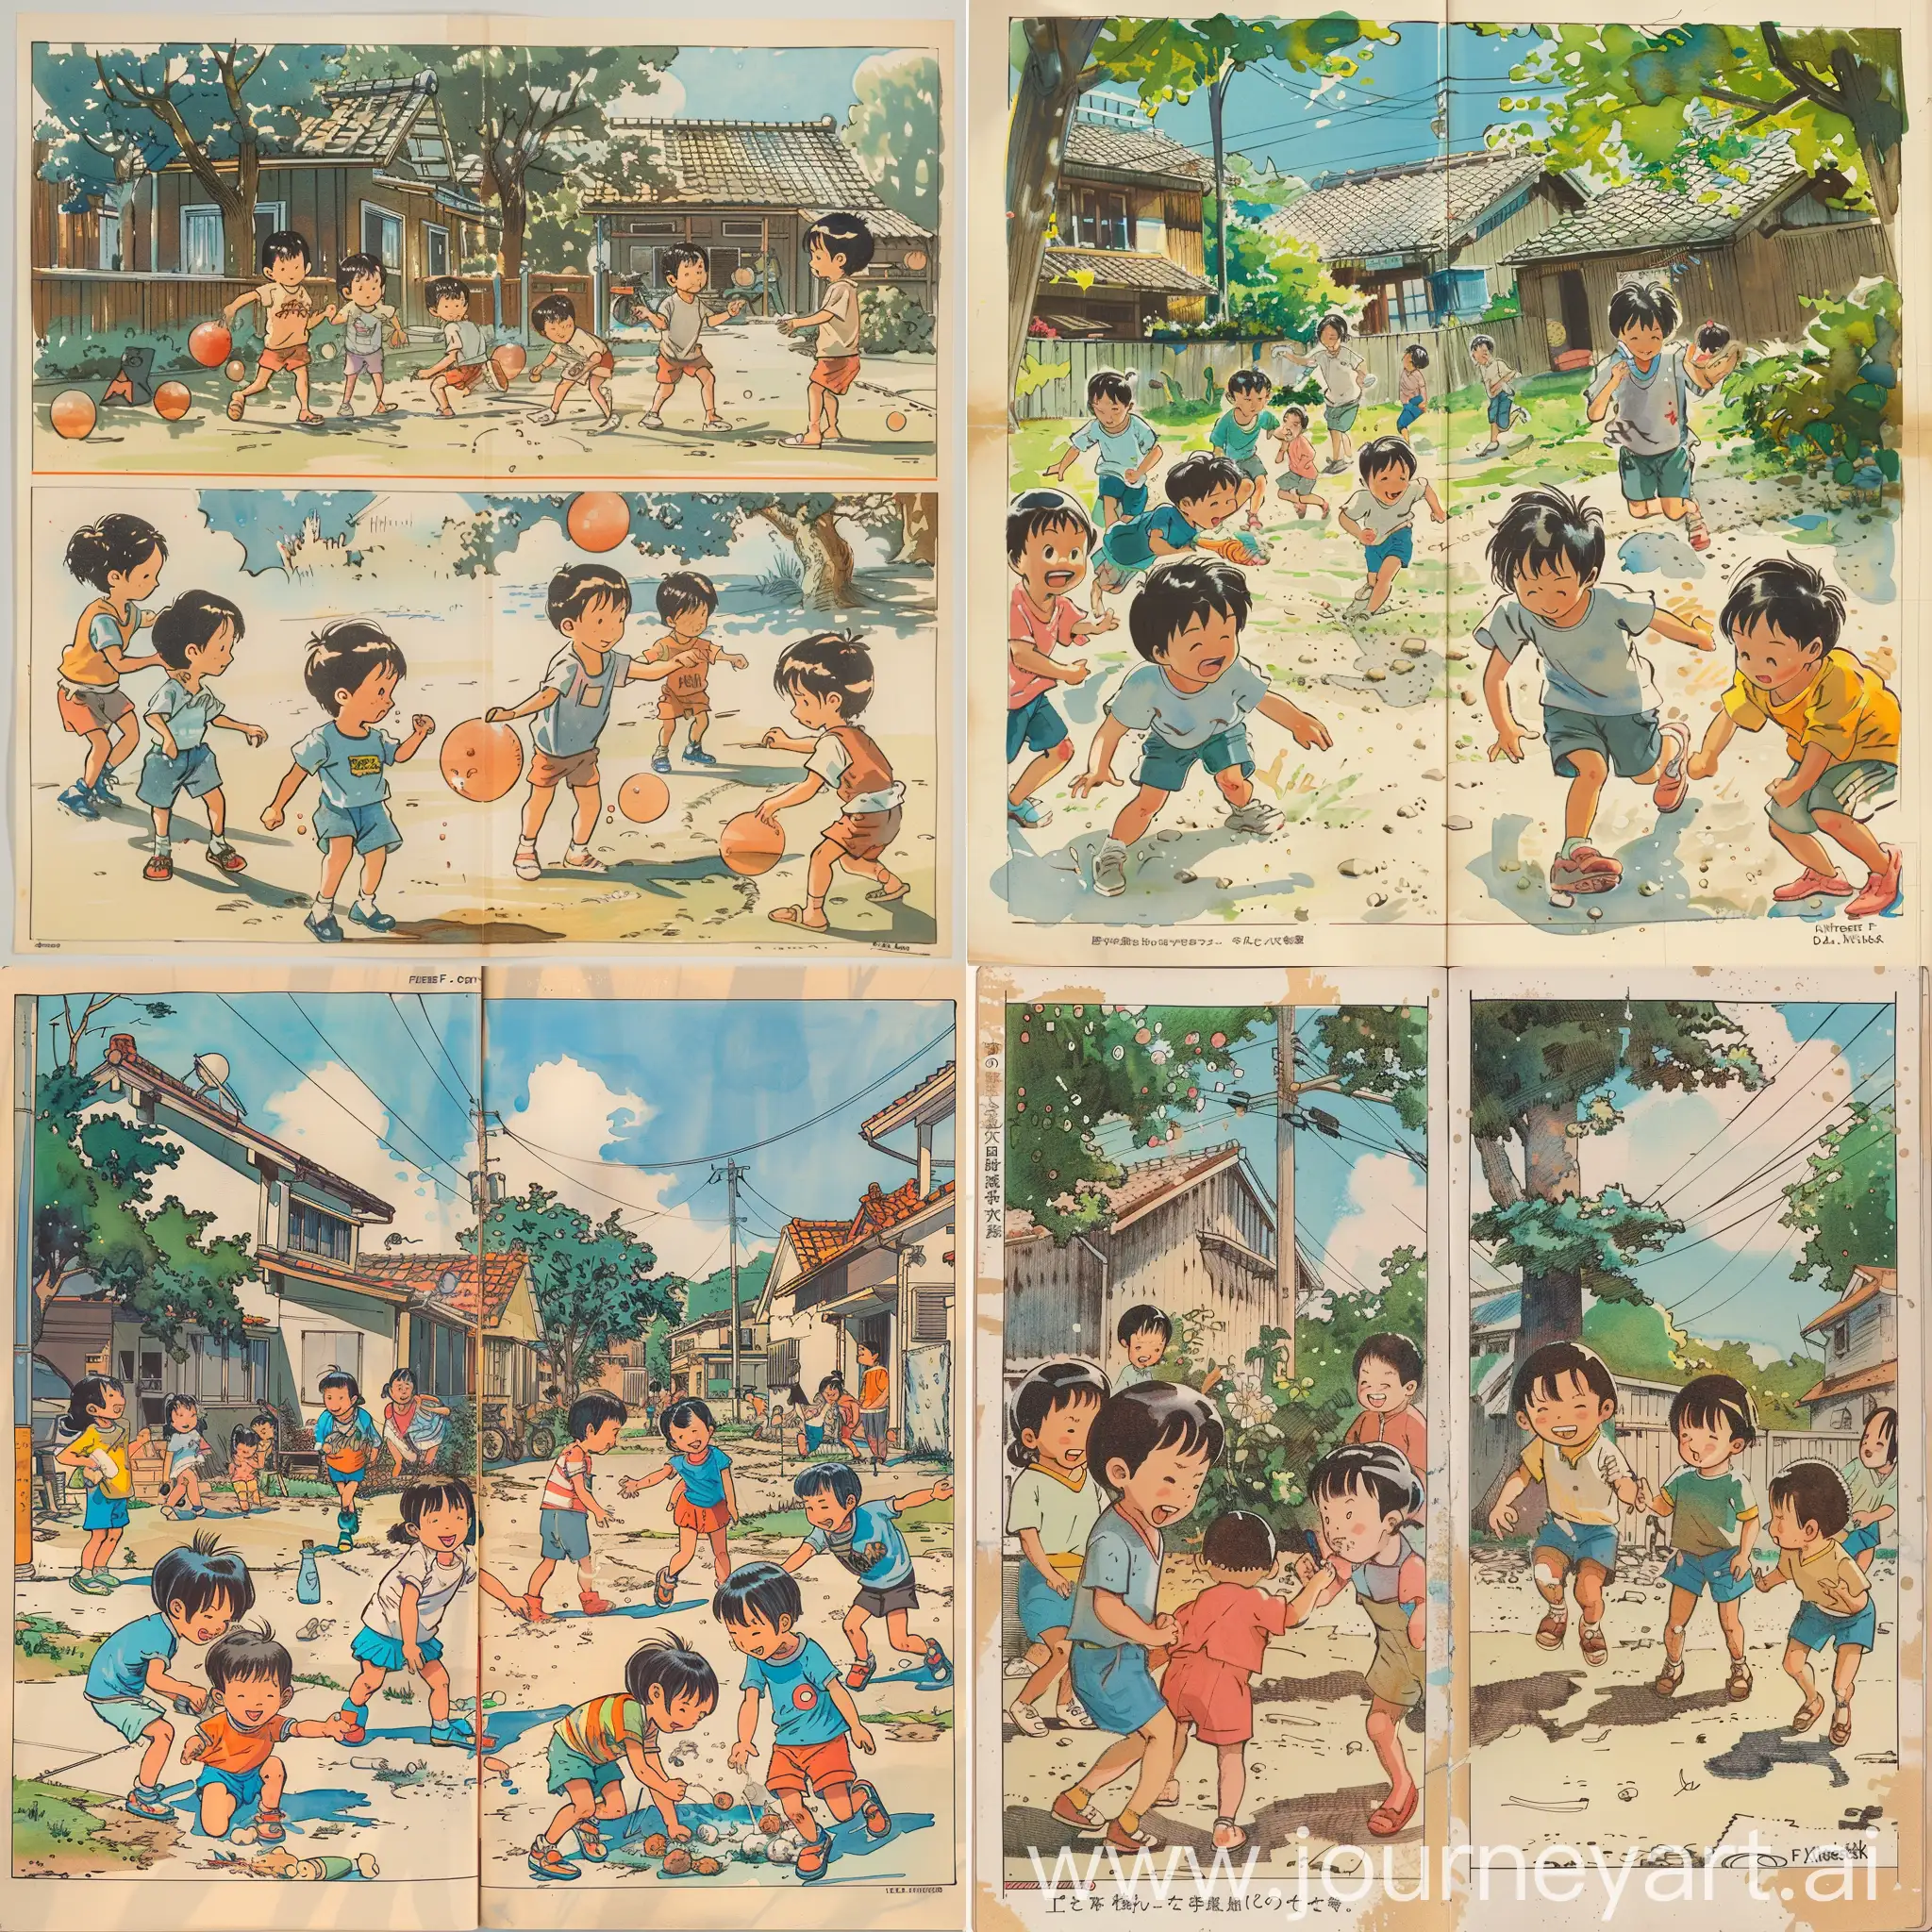 Lively-Neighborhood-Children-Playing-Outdoors-in-Fujio-F-Fujikos-Cartoonish-Style